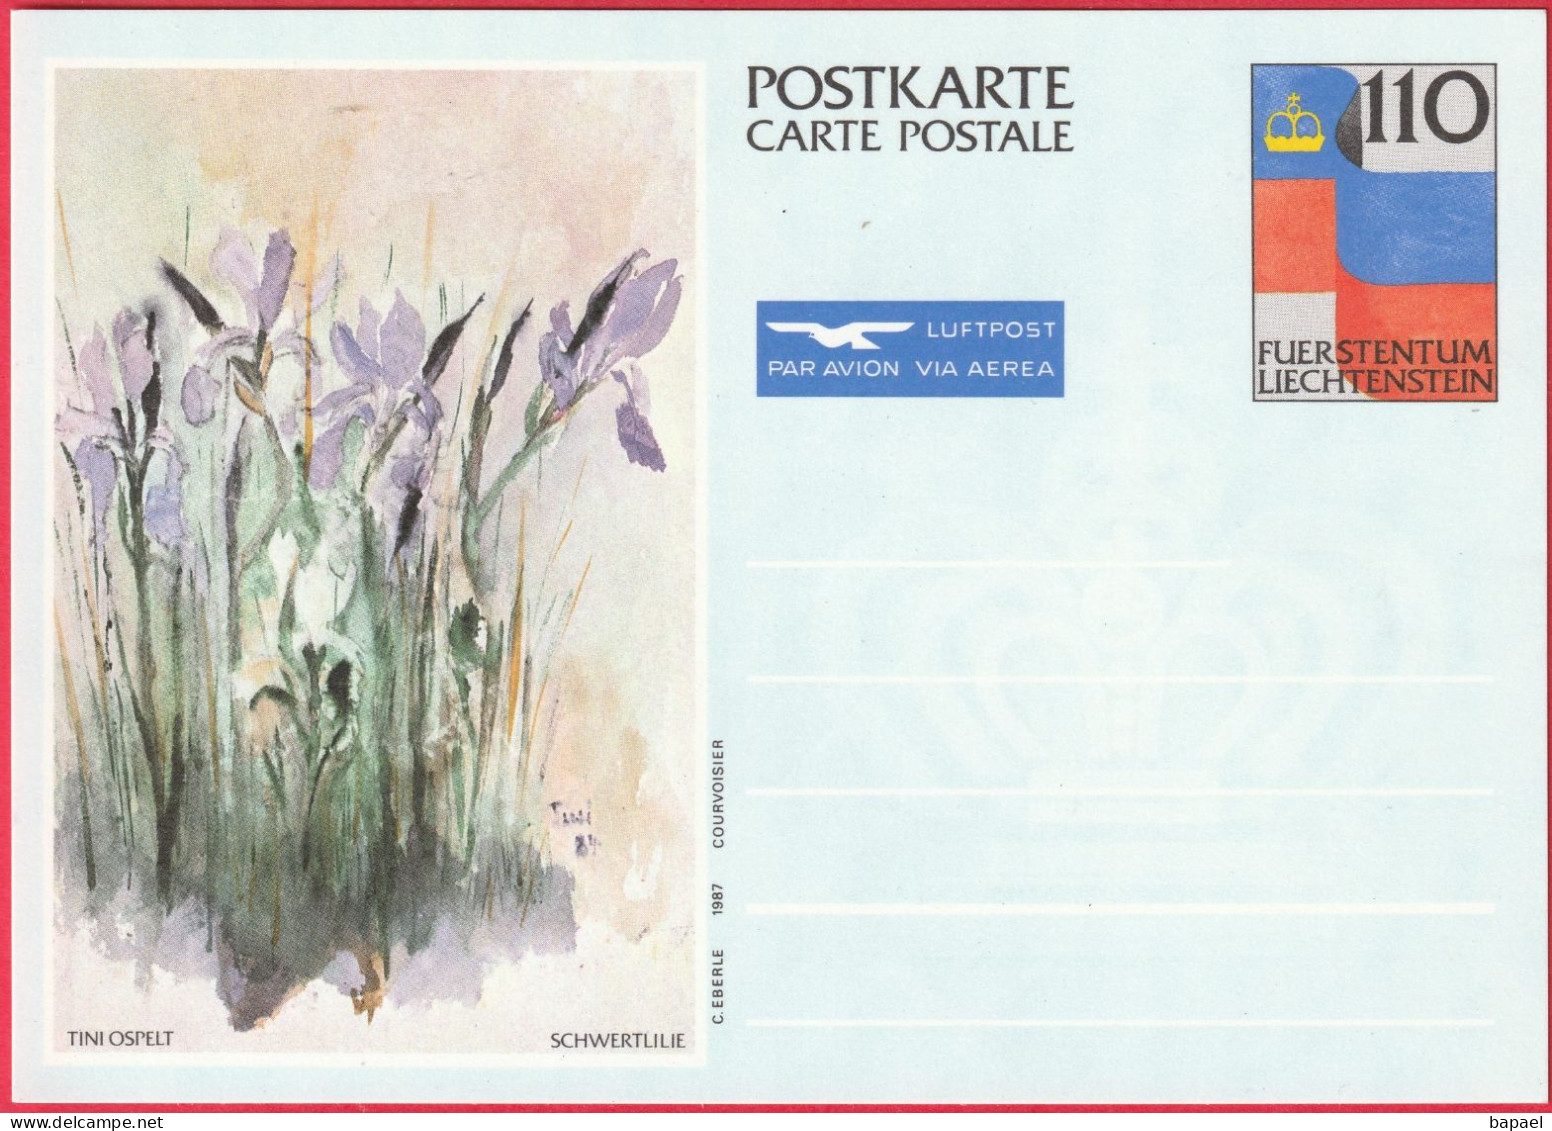 Entier Postal (CP) Du Liechtenstein (1987) - Par Avion - Schwertlilie (Iris) De Tini Ospelt - Ganzsachen